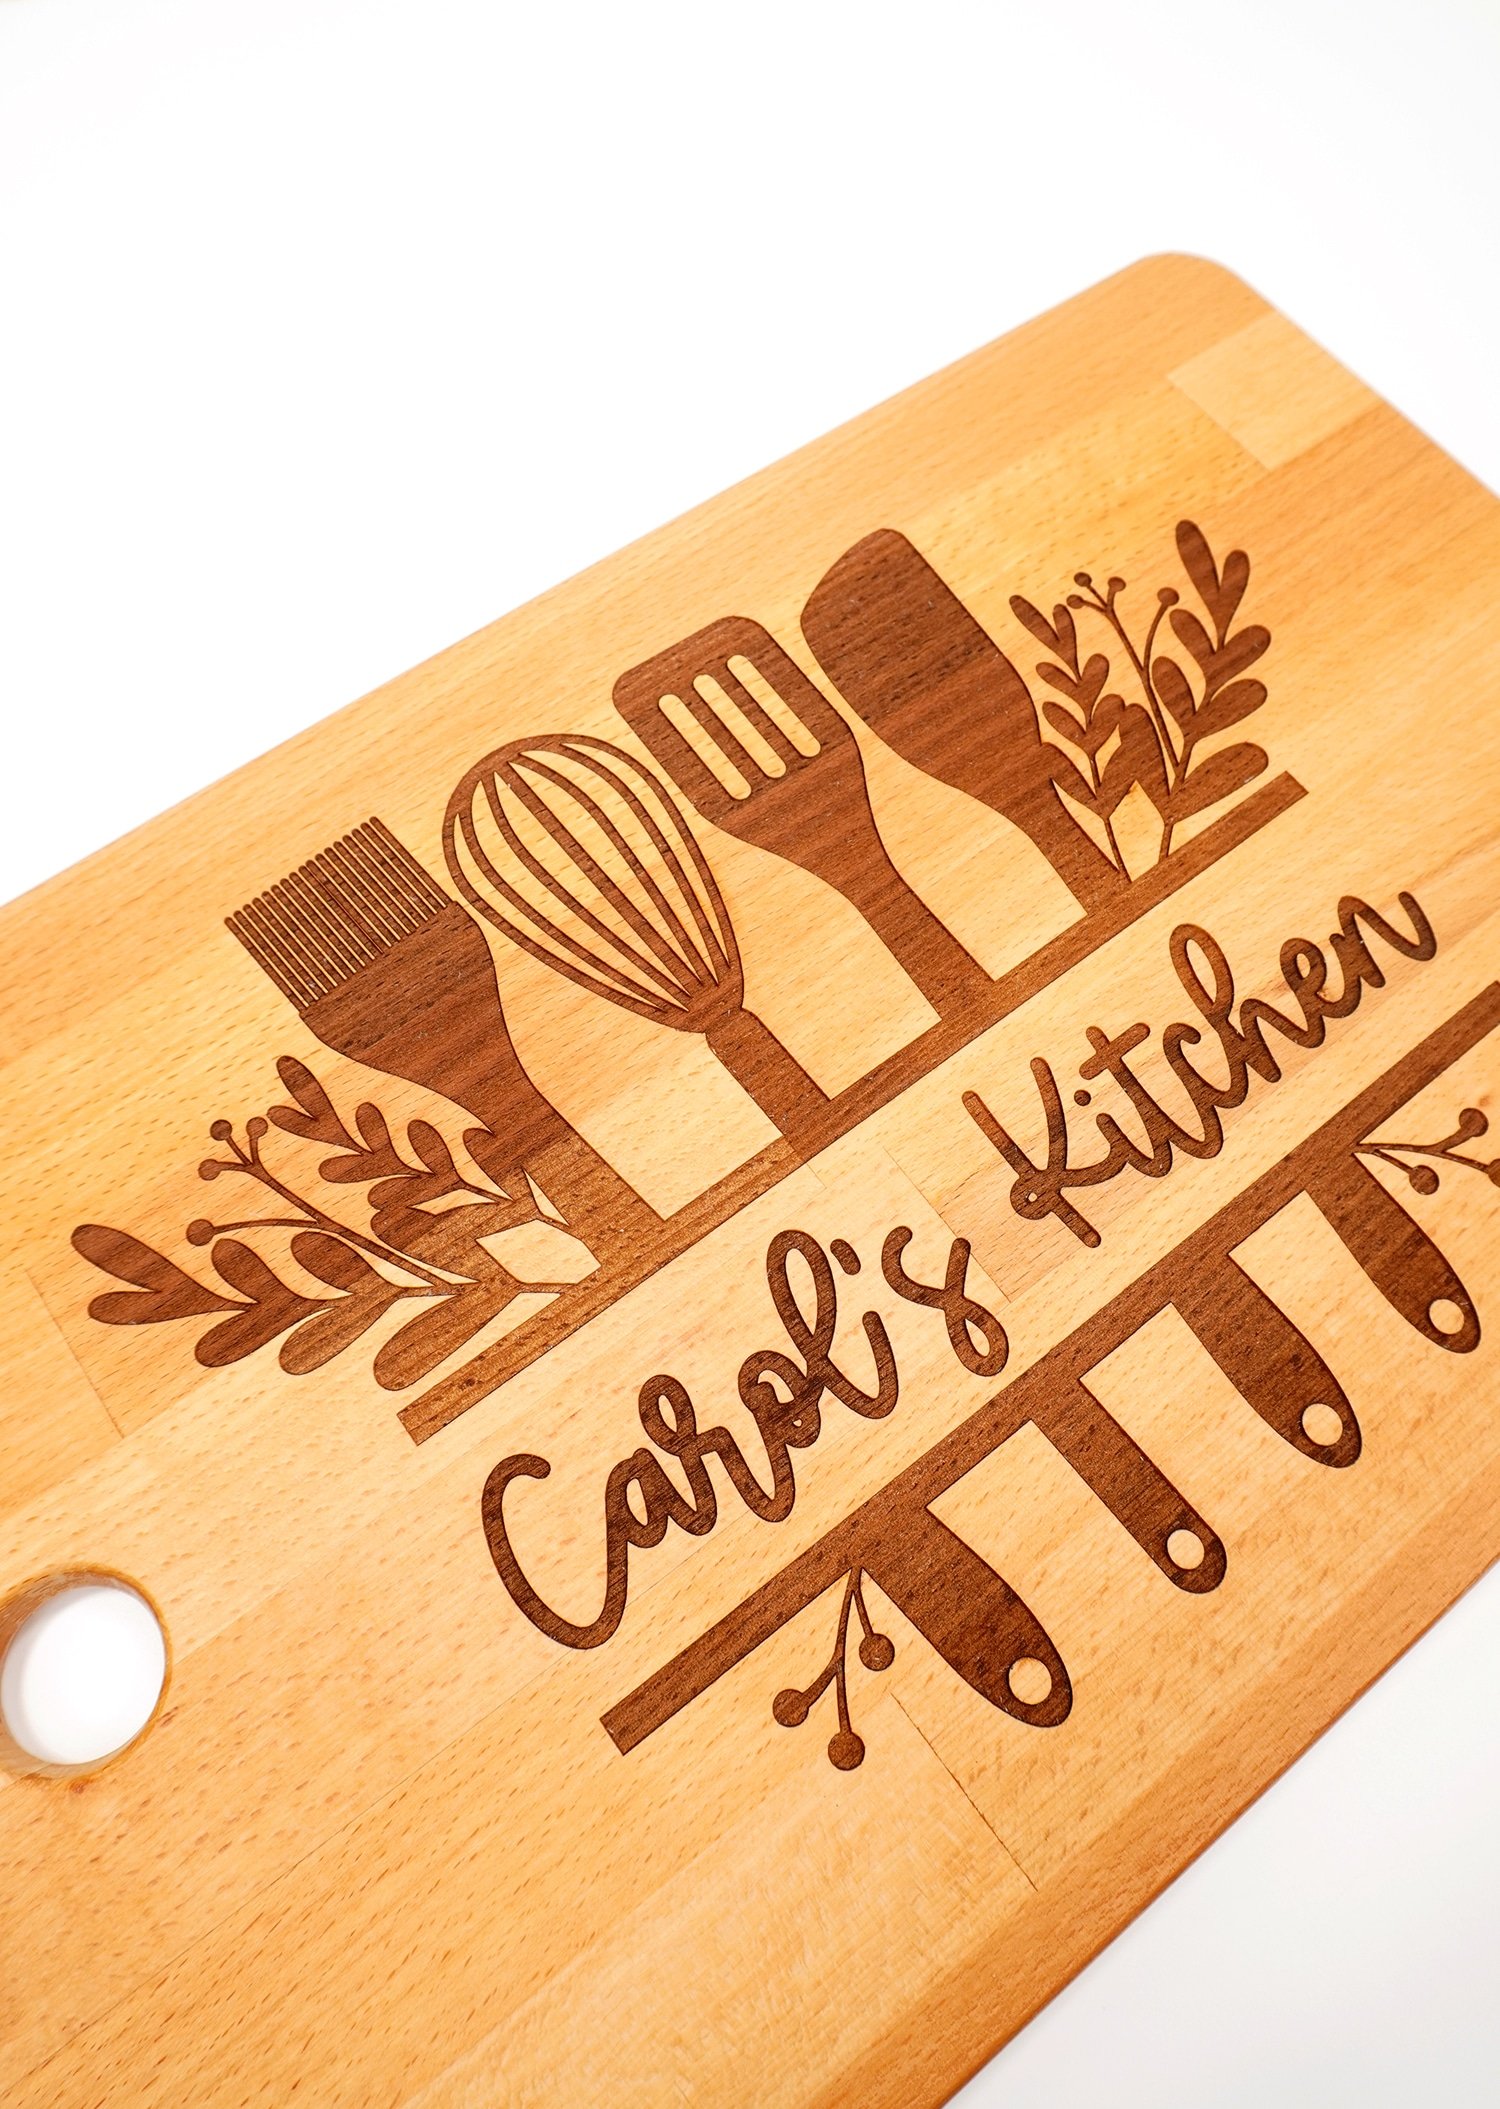 Glowforge Engraved Ikea Cutting Board with "Carol's Kitchen" design on white background